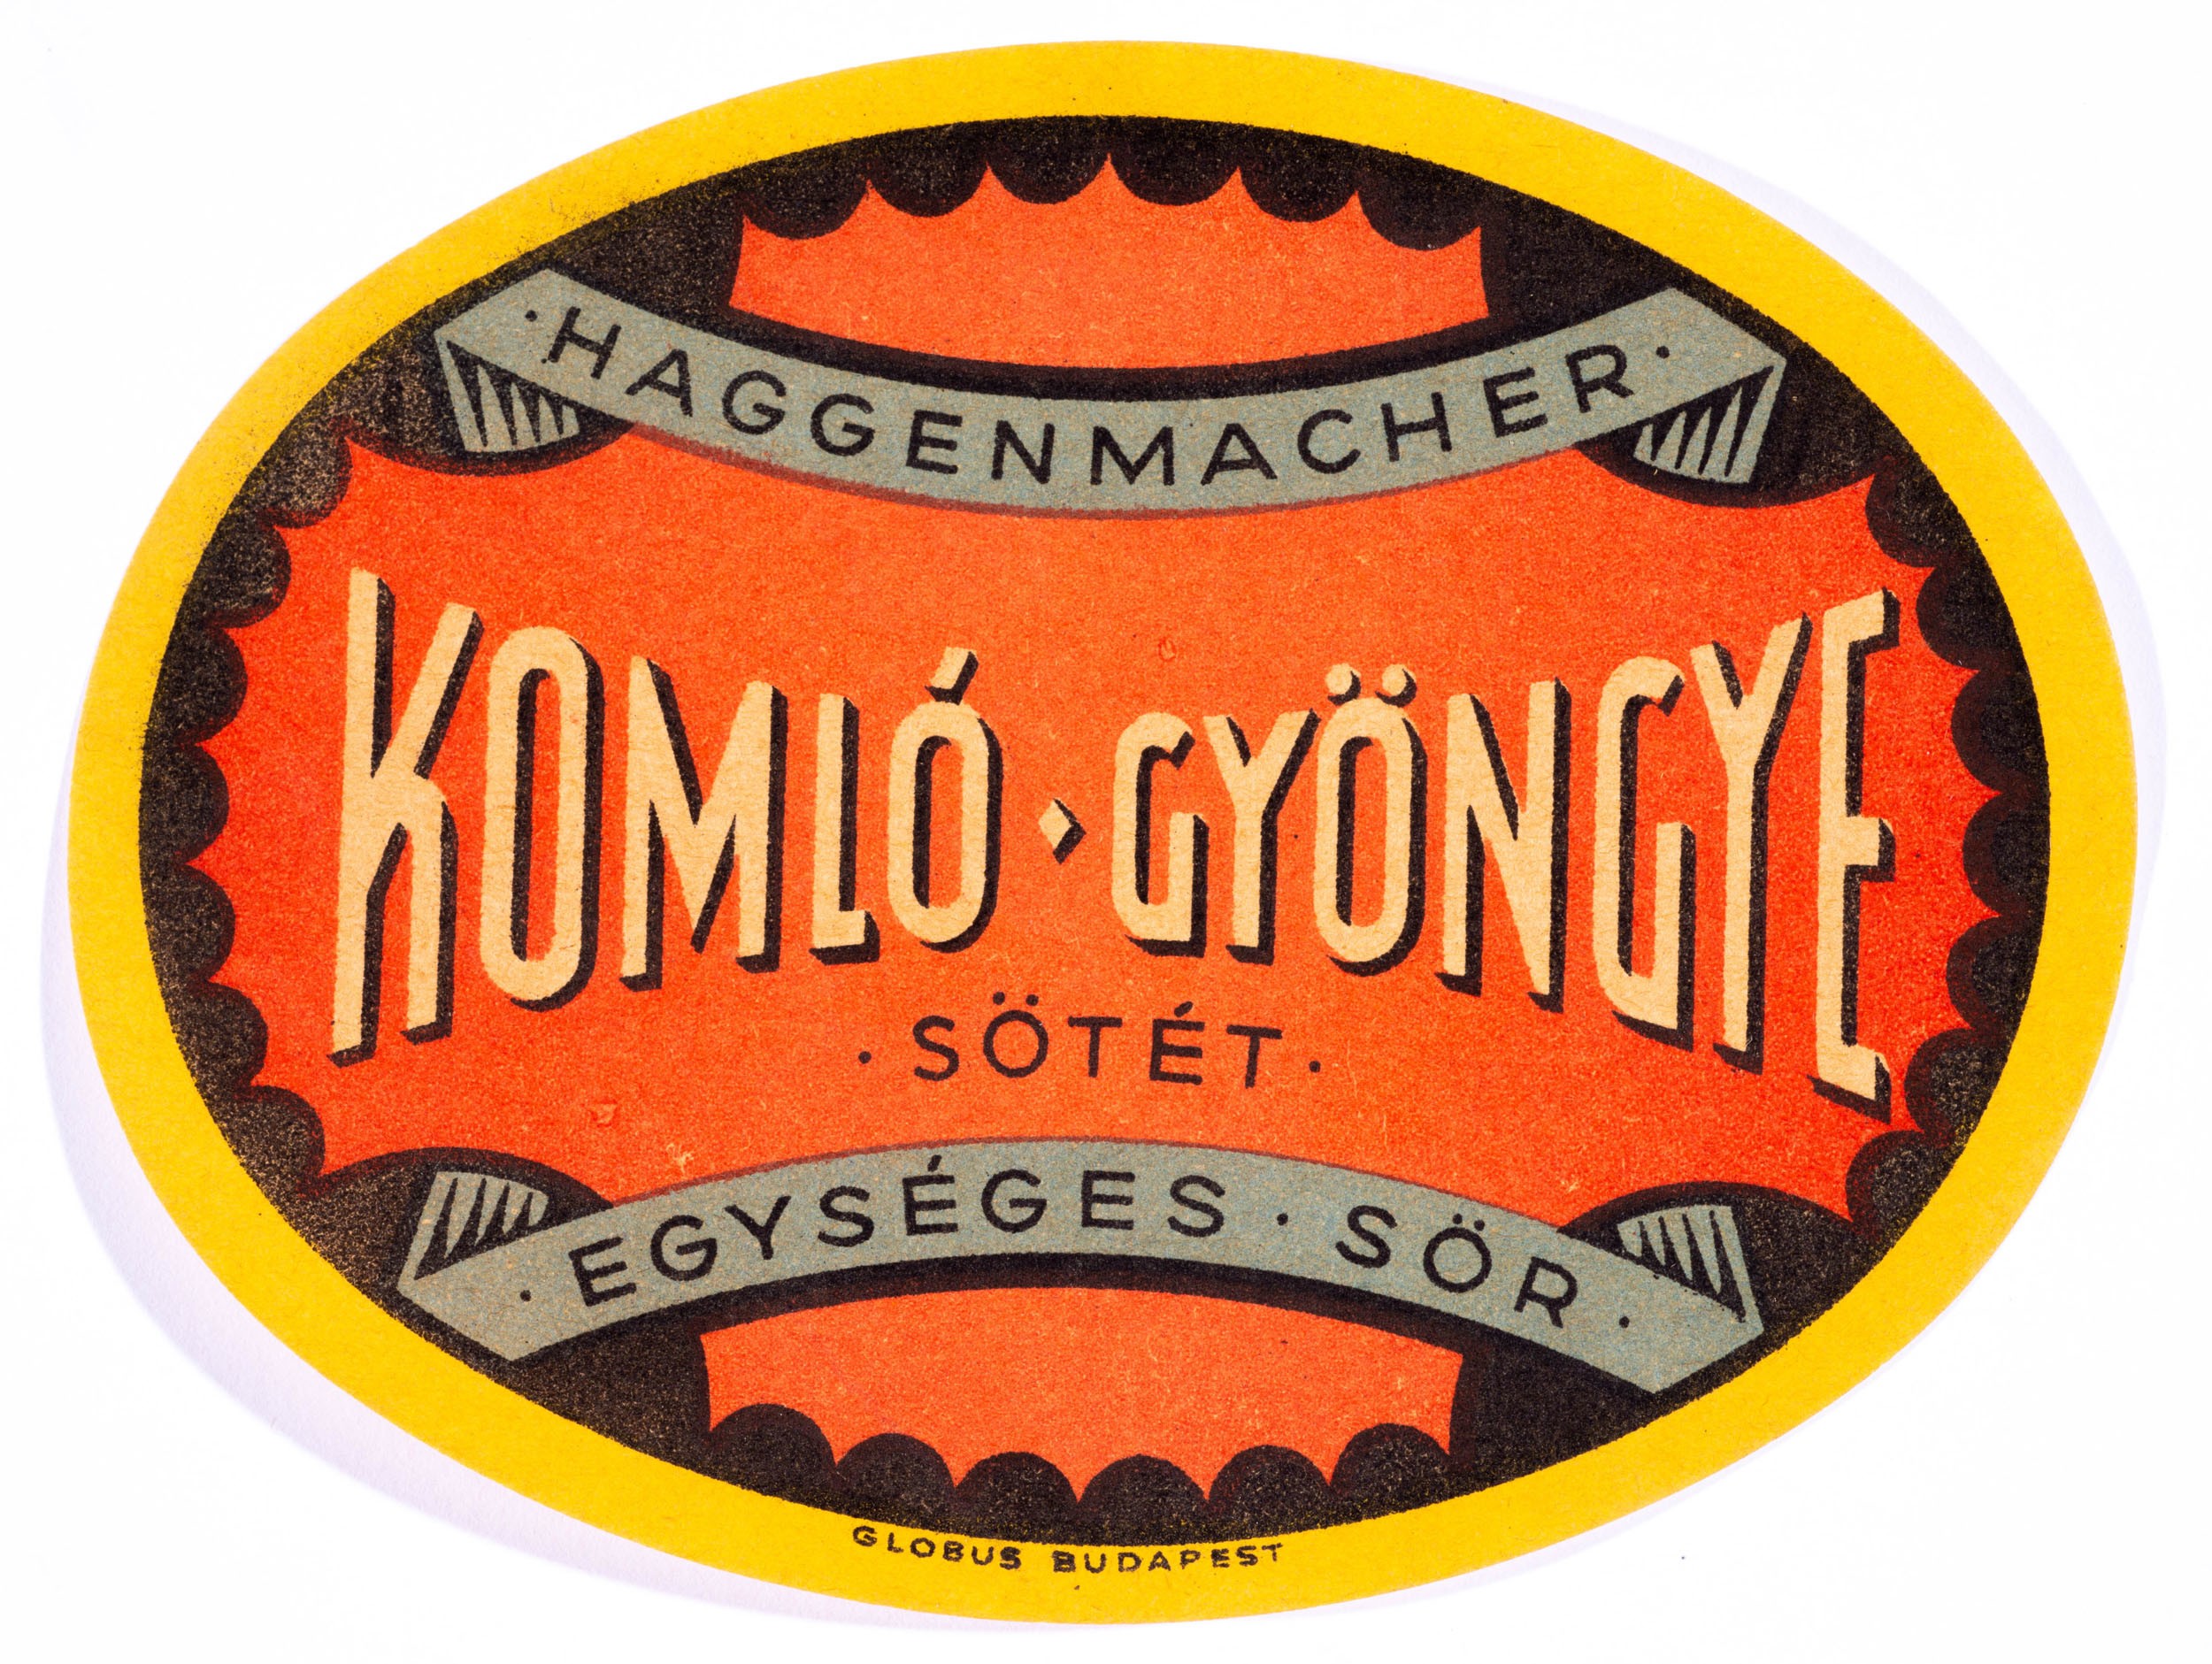 Haggenmacher komló gyöngye sör (Söripari Emléktár - Dreher Sörmúzeum CC BY-NC-SA)